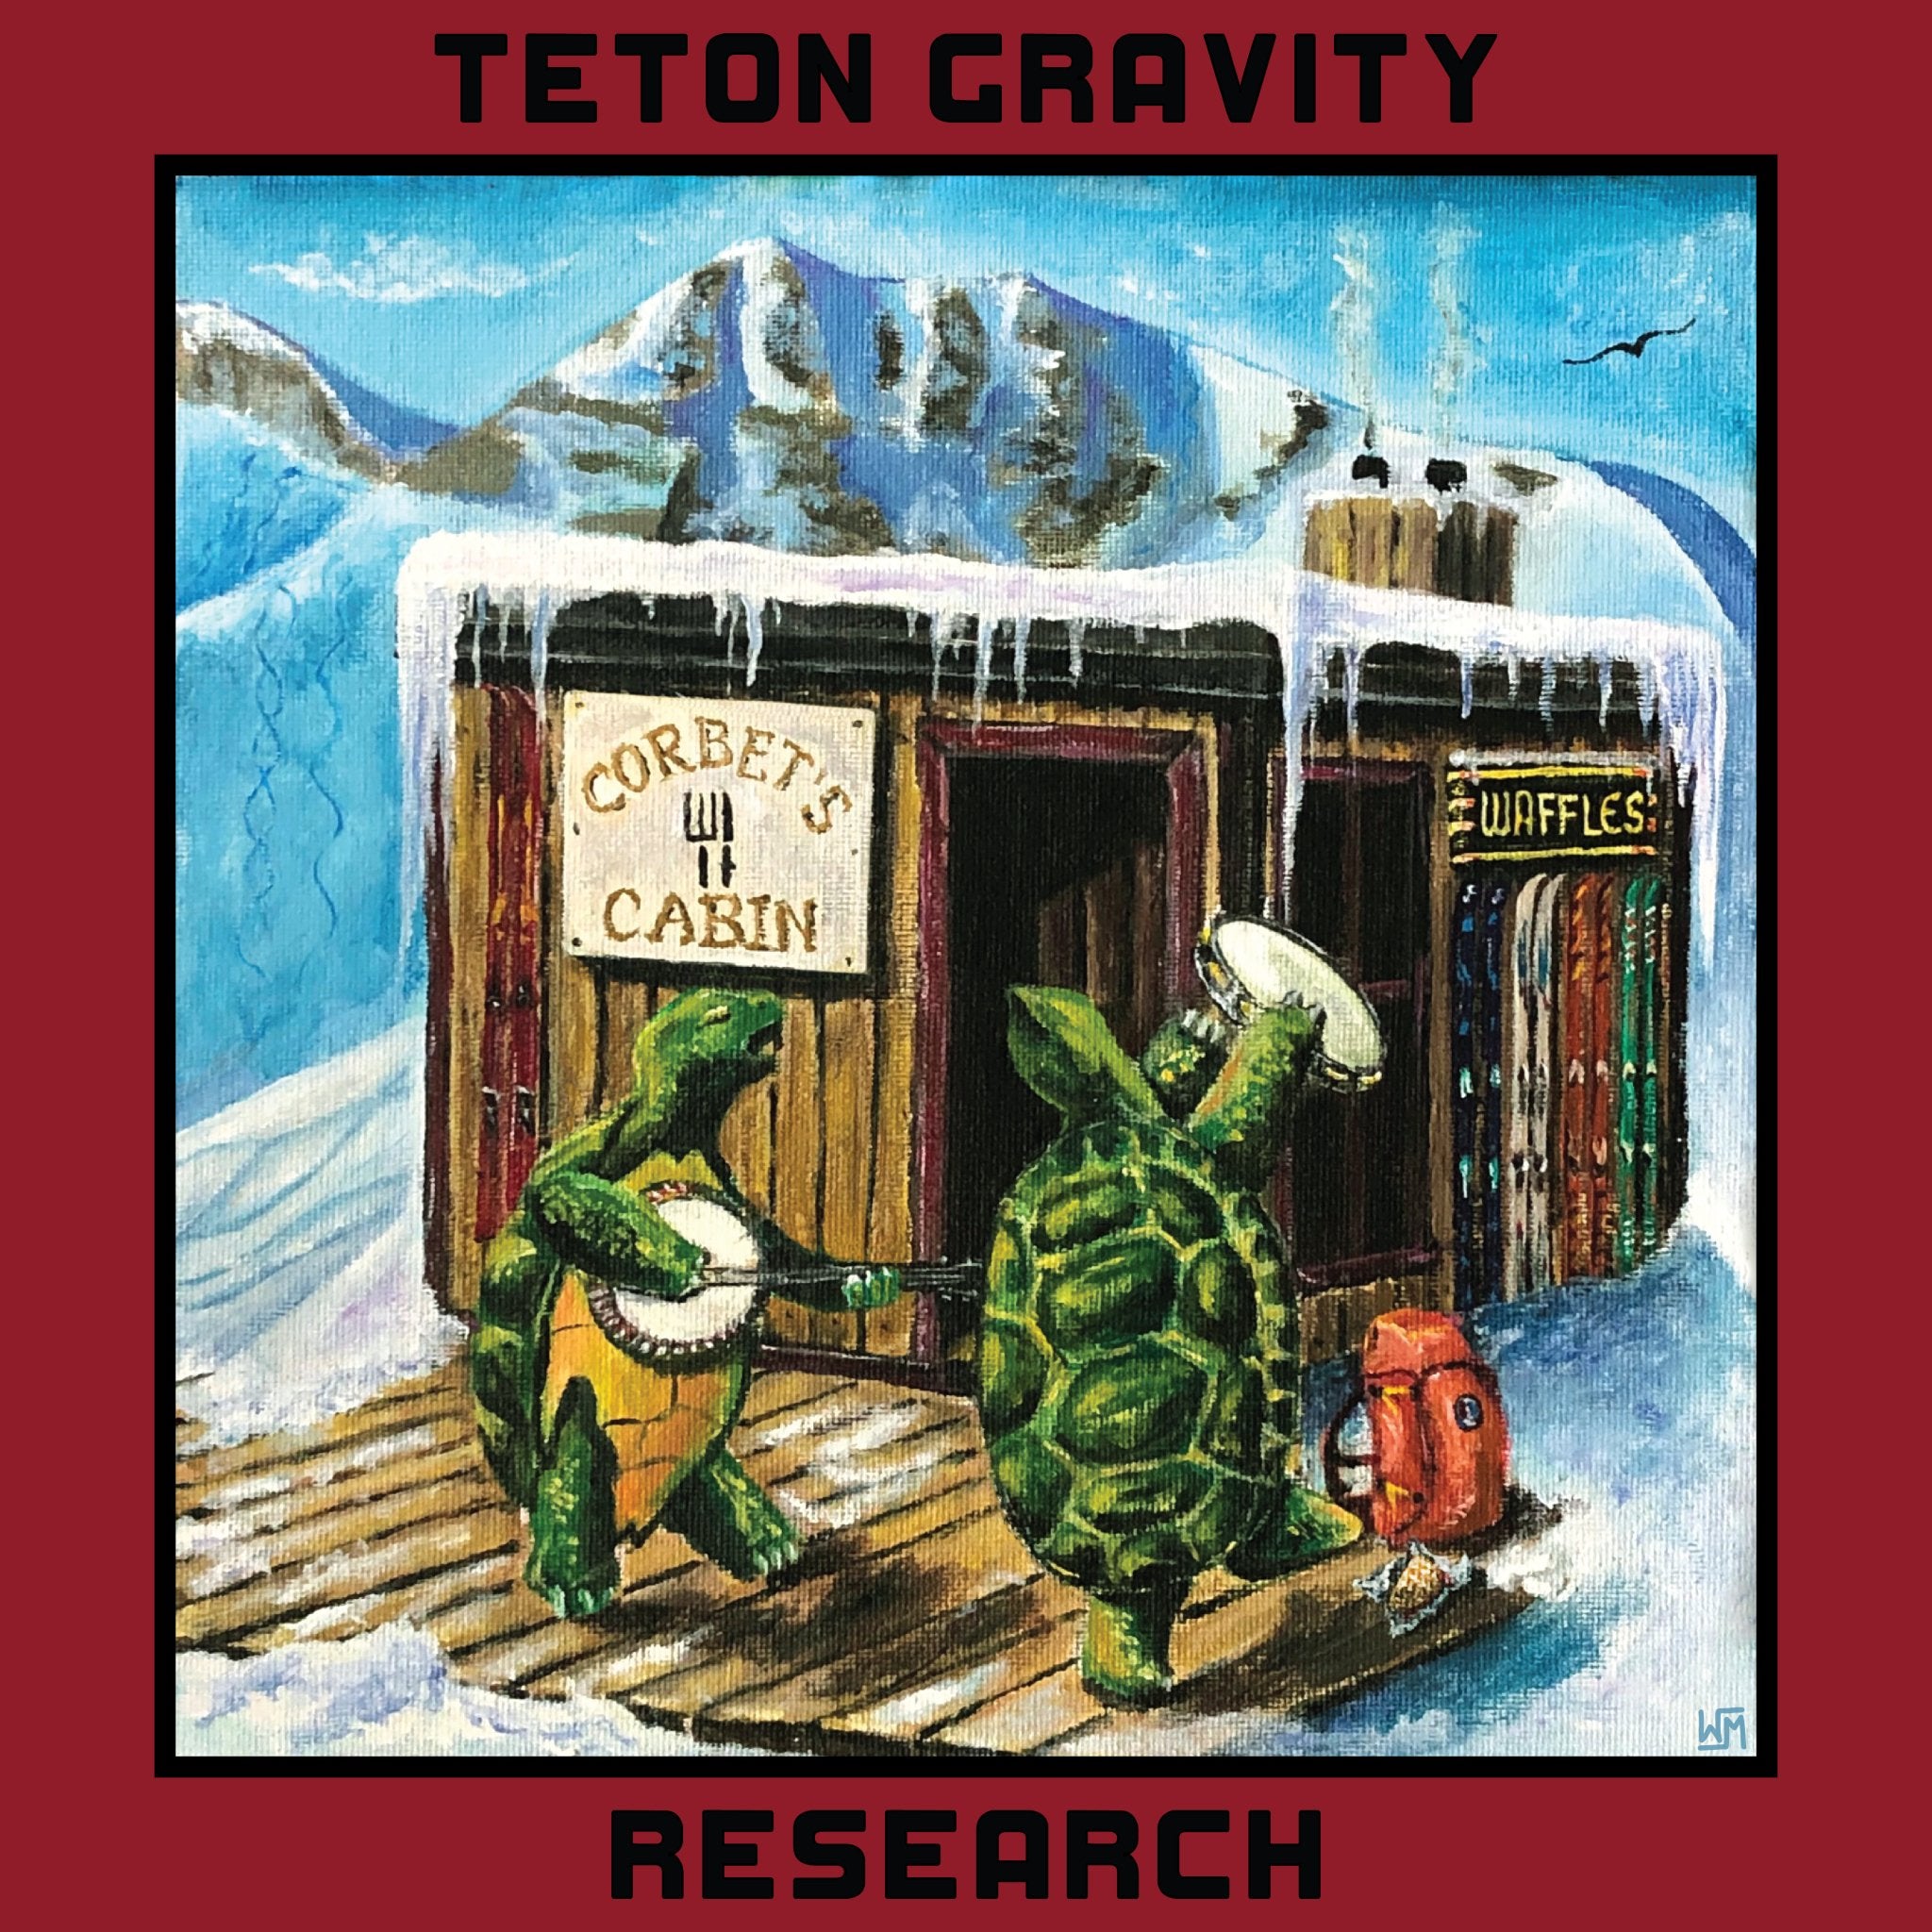 Grateful Dead x TGR "Corbet's Station" Sticker by Will Munford - Teton Gravity Research